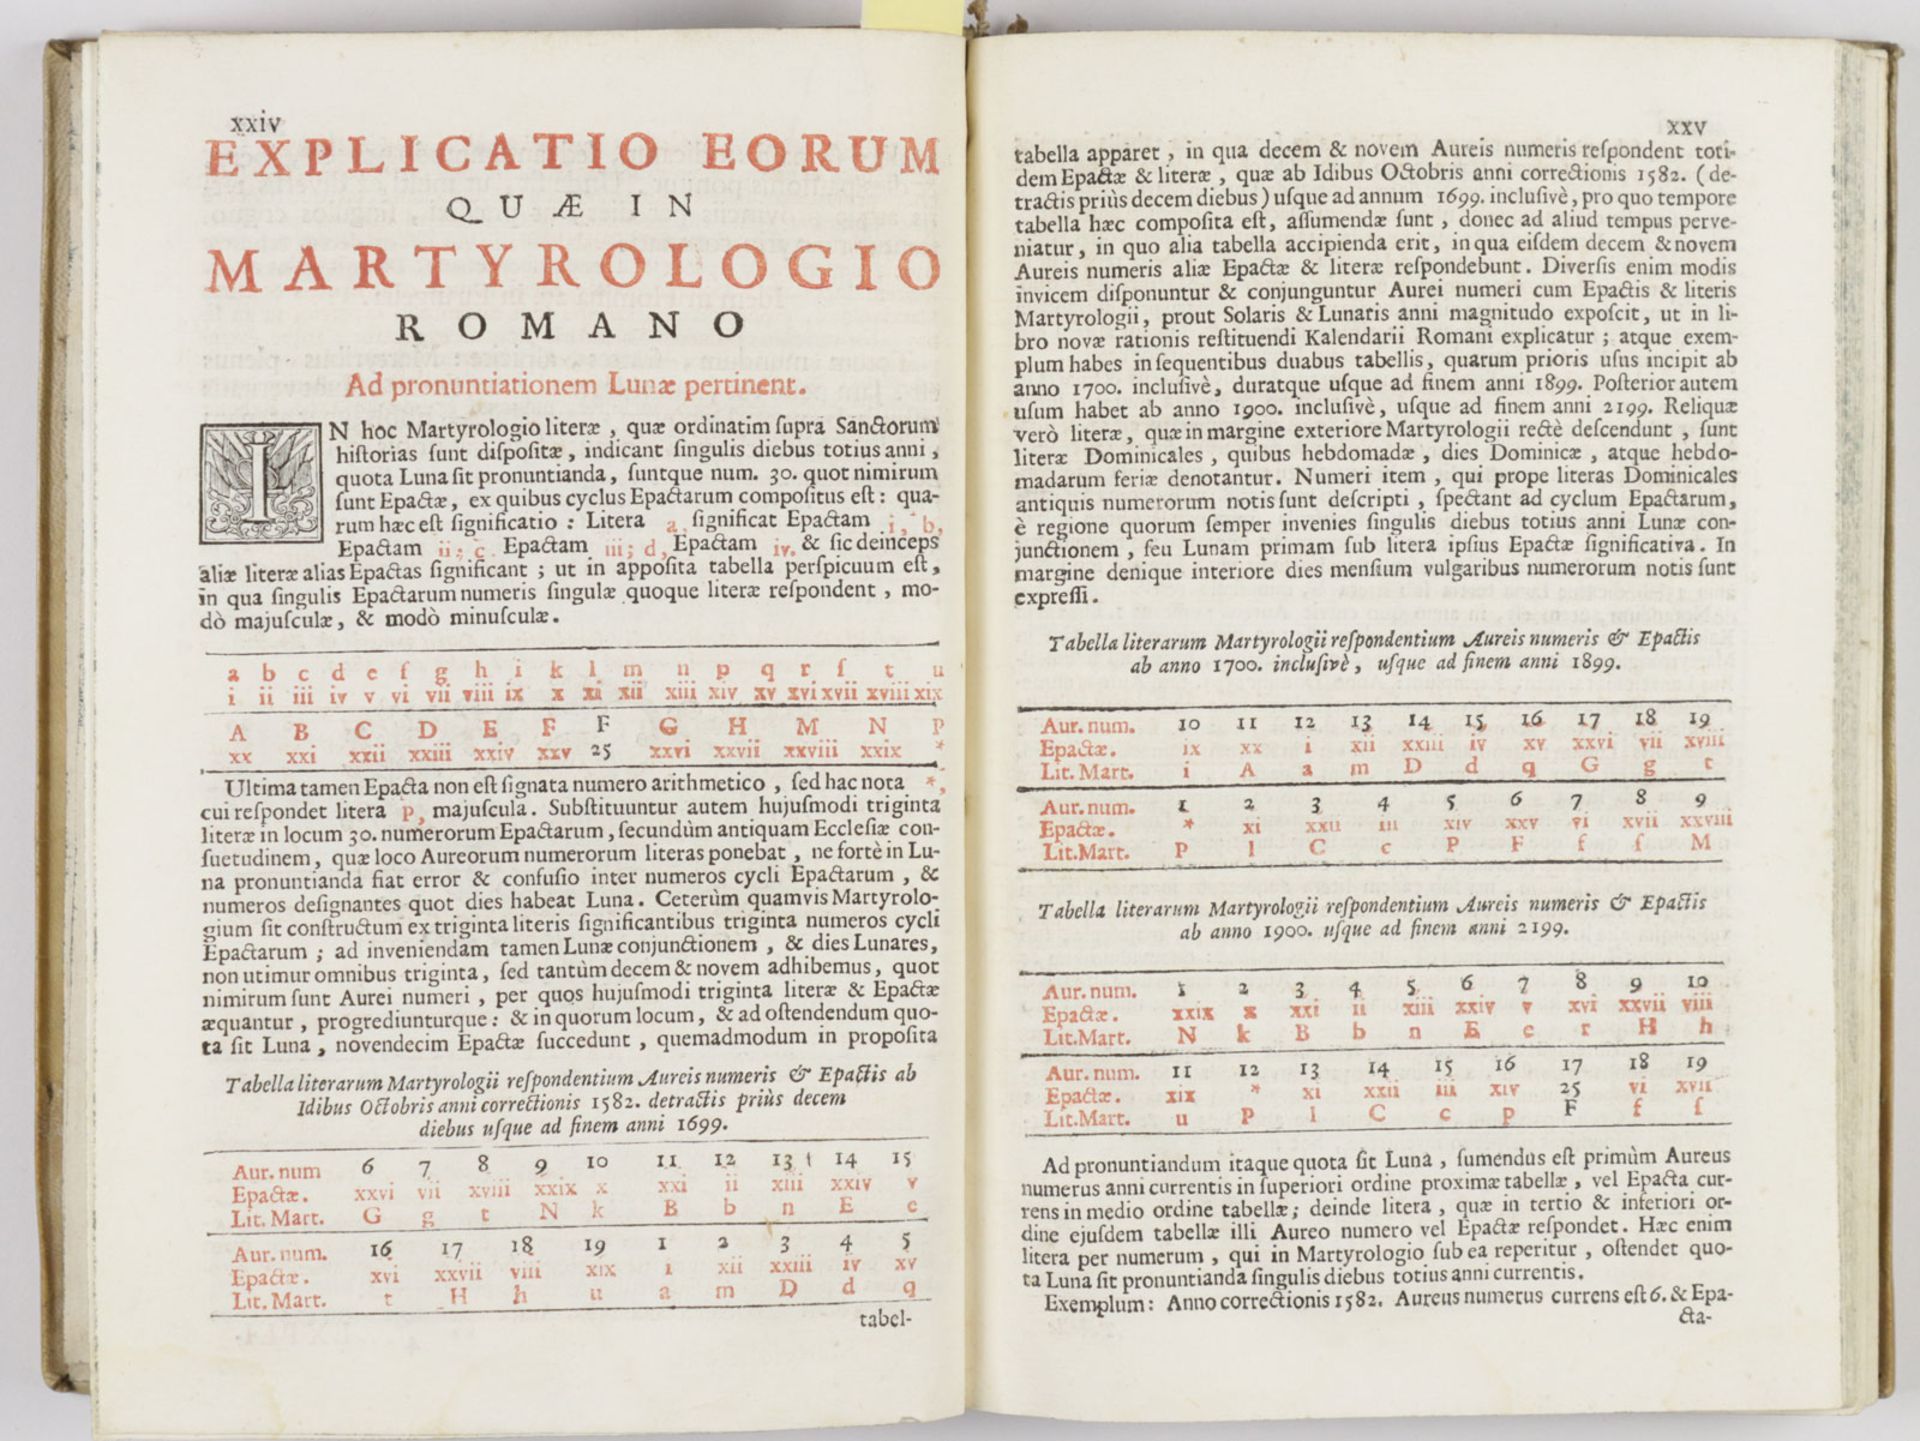 Martyrologium Romanum Gregorii XIII - Image 3 of 7